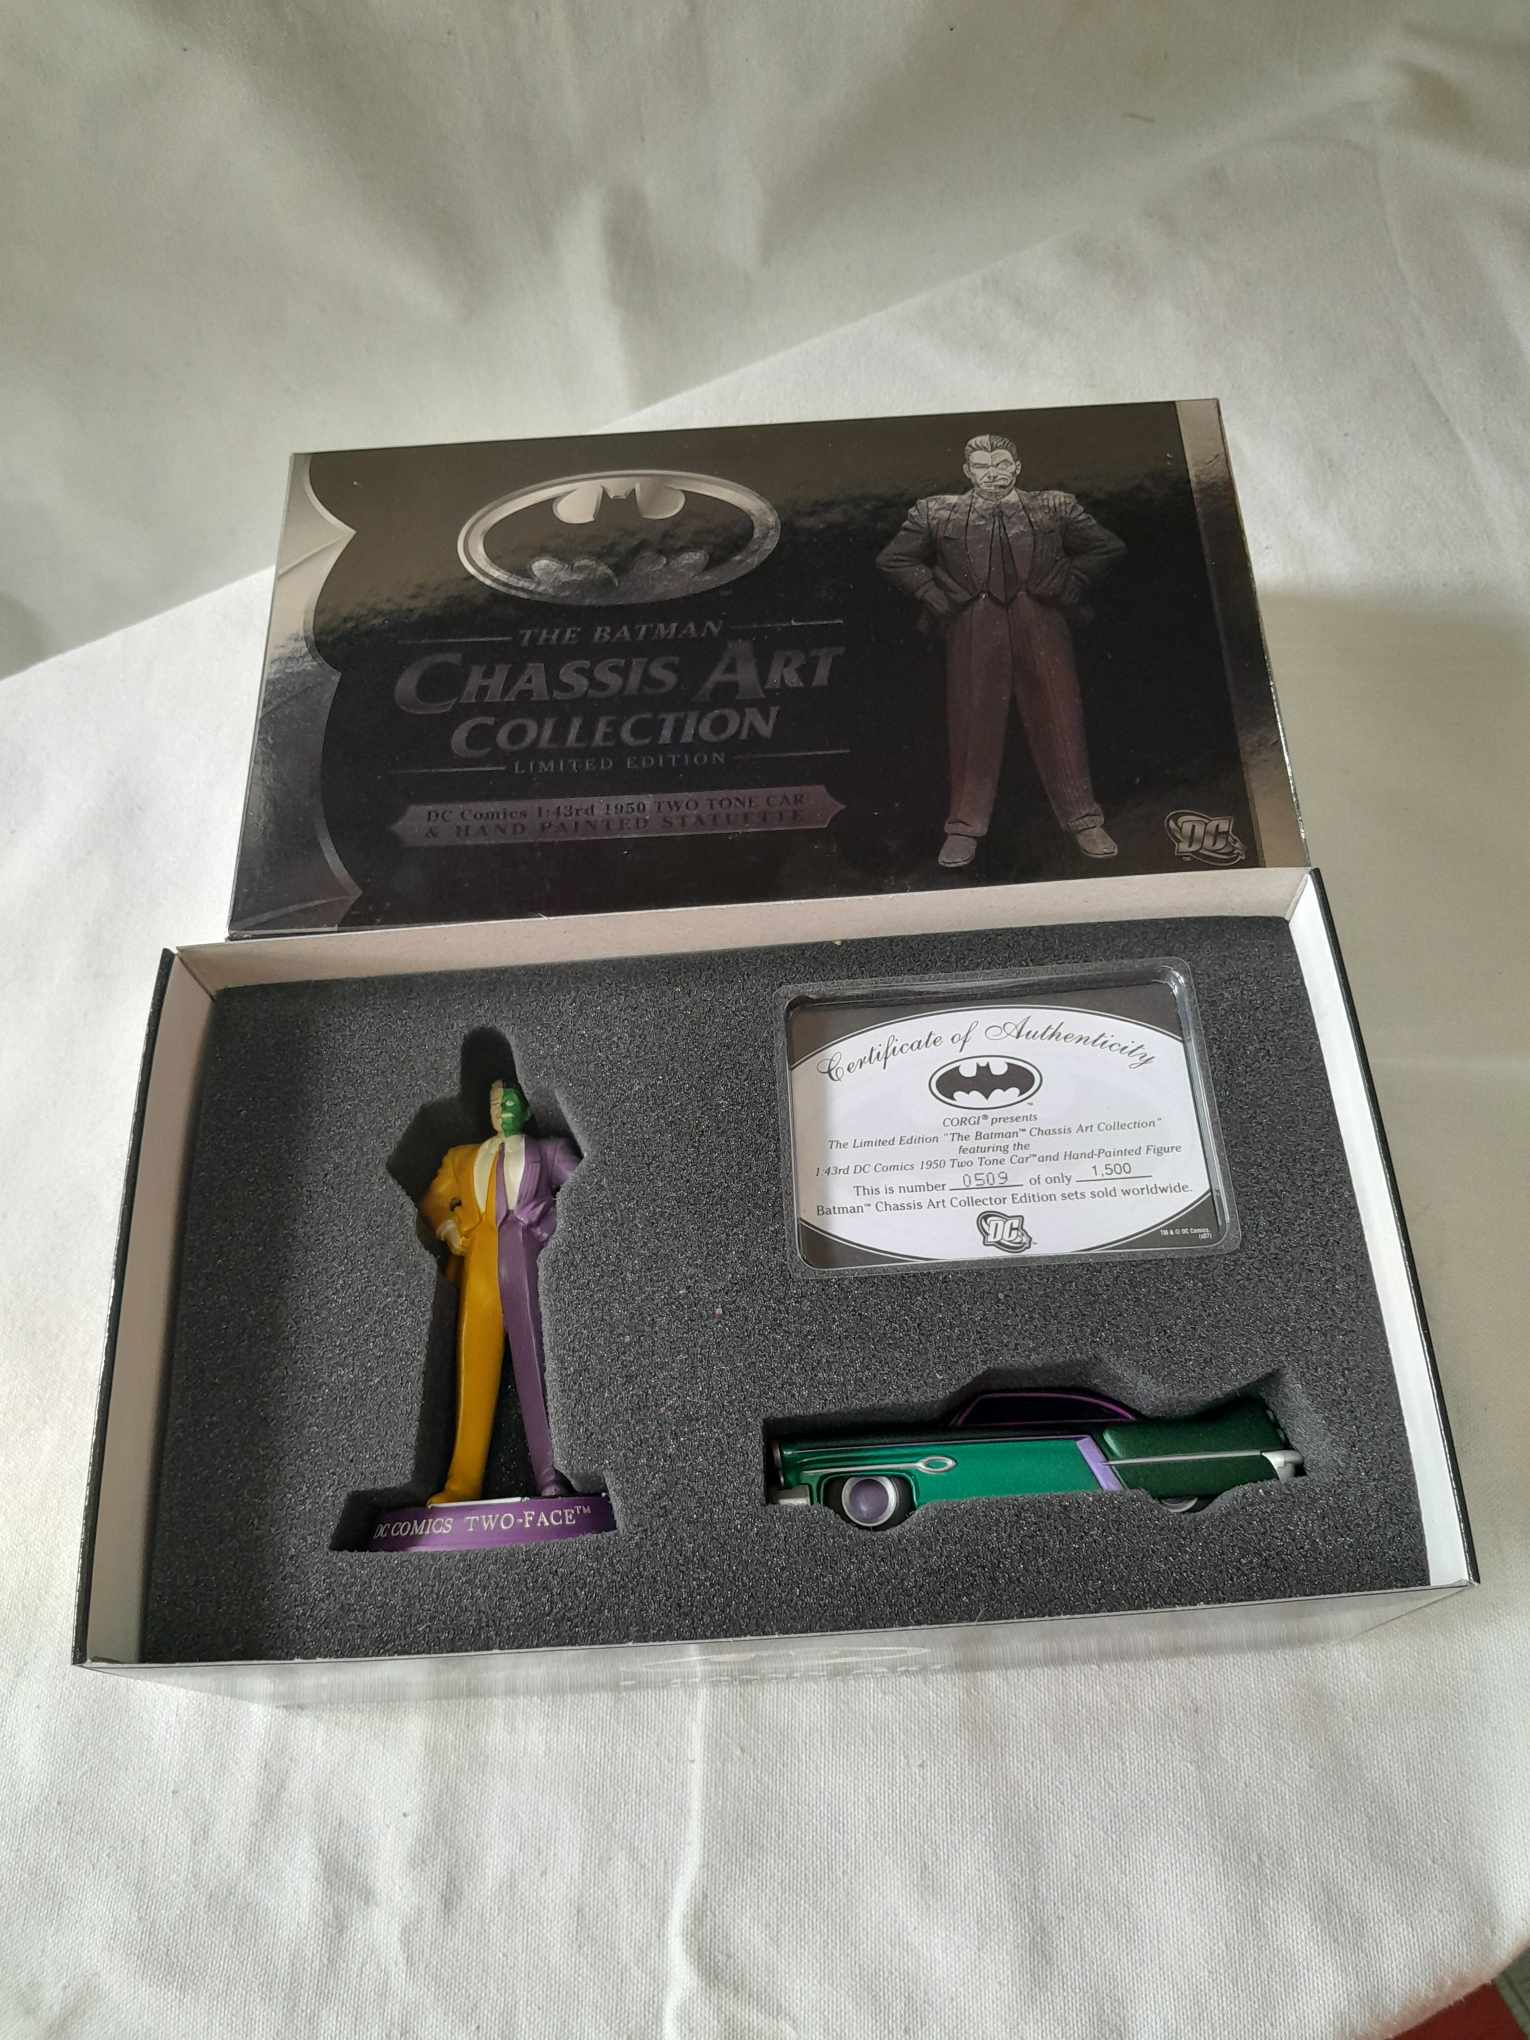 CORGI DC Comics The Batman Chassis Art Collection " Two Face + Car"